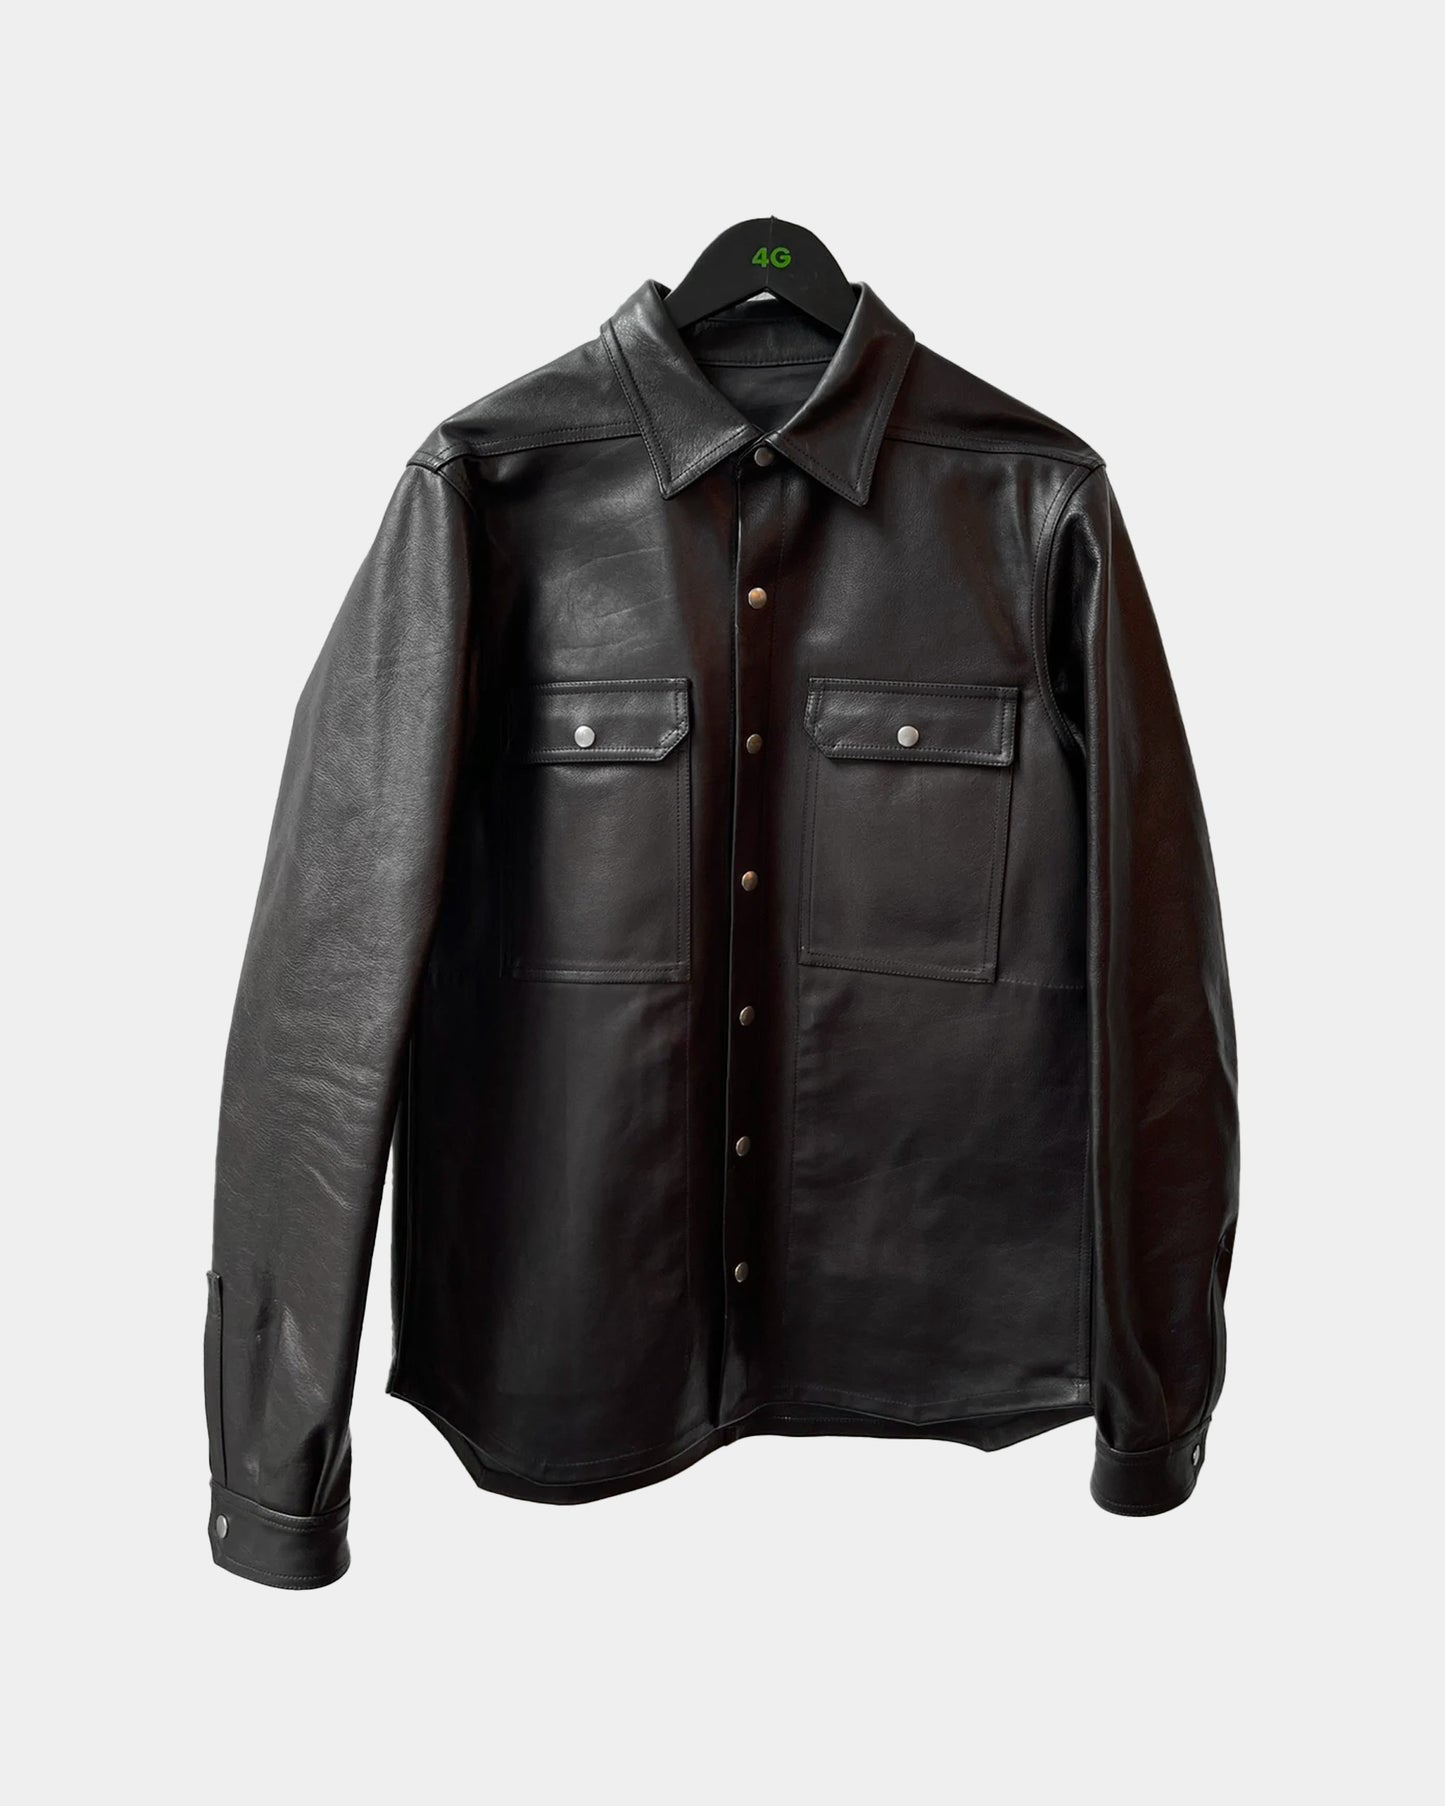 Rick Owens Leather Jacket Shirt Black Fits M or L